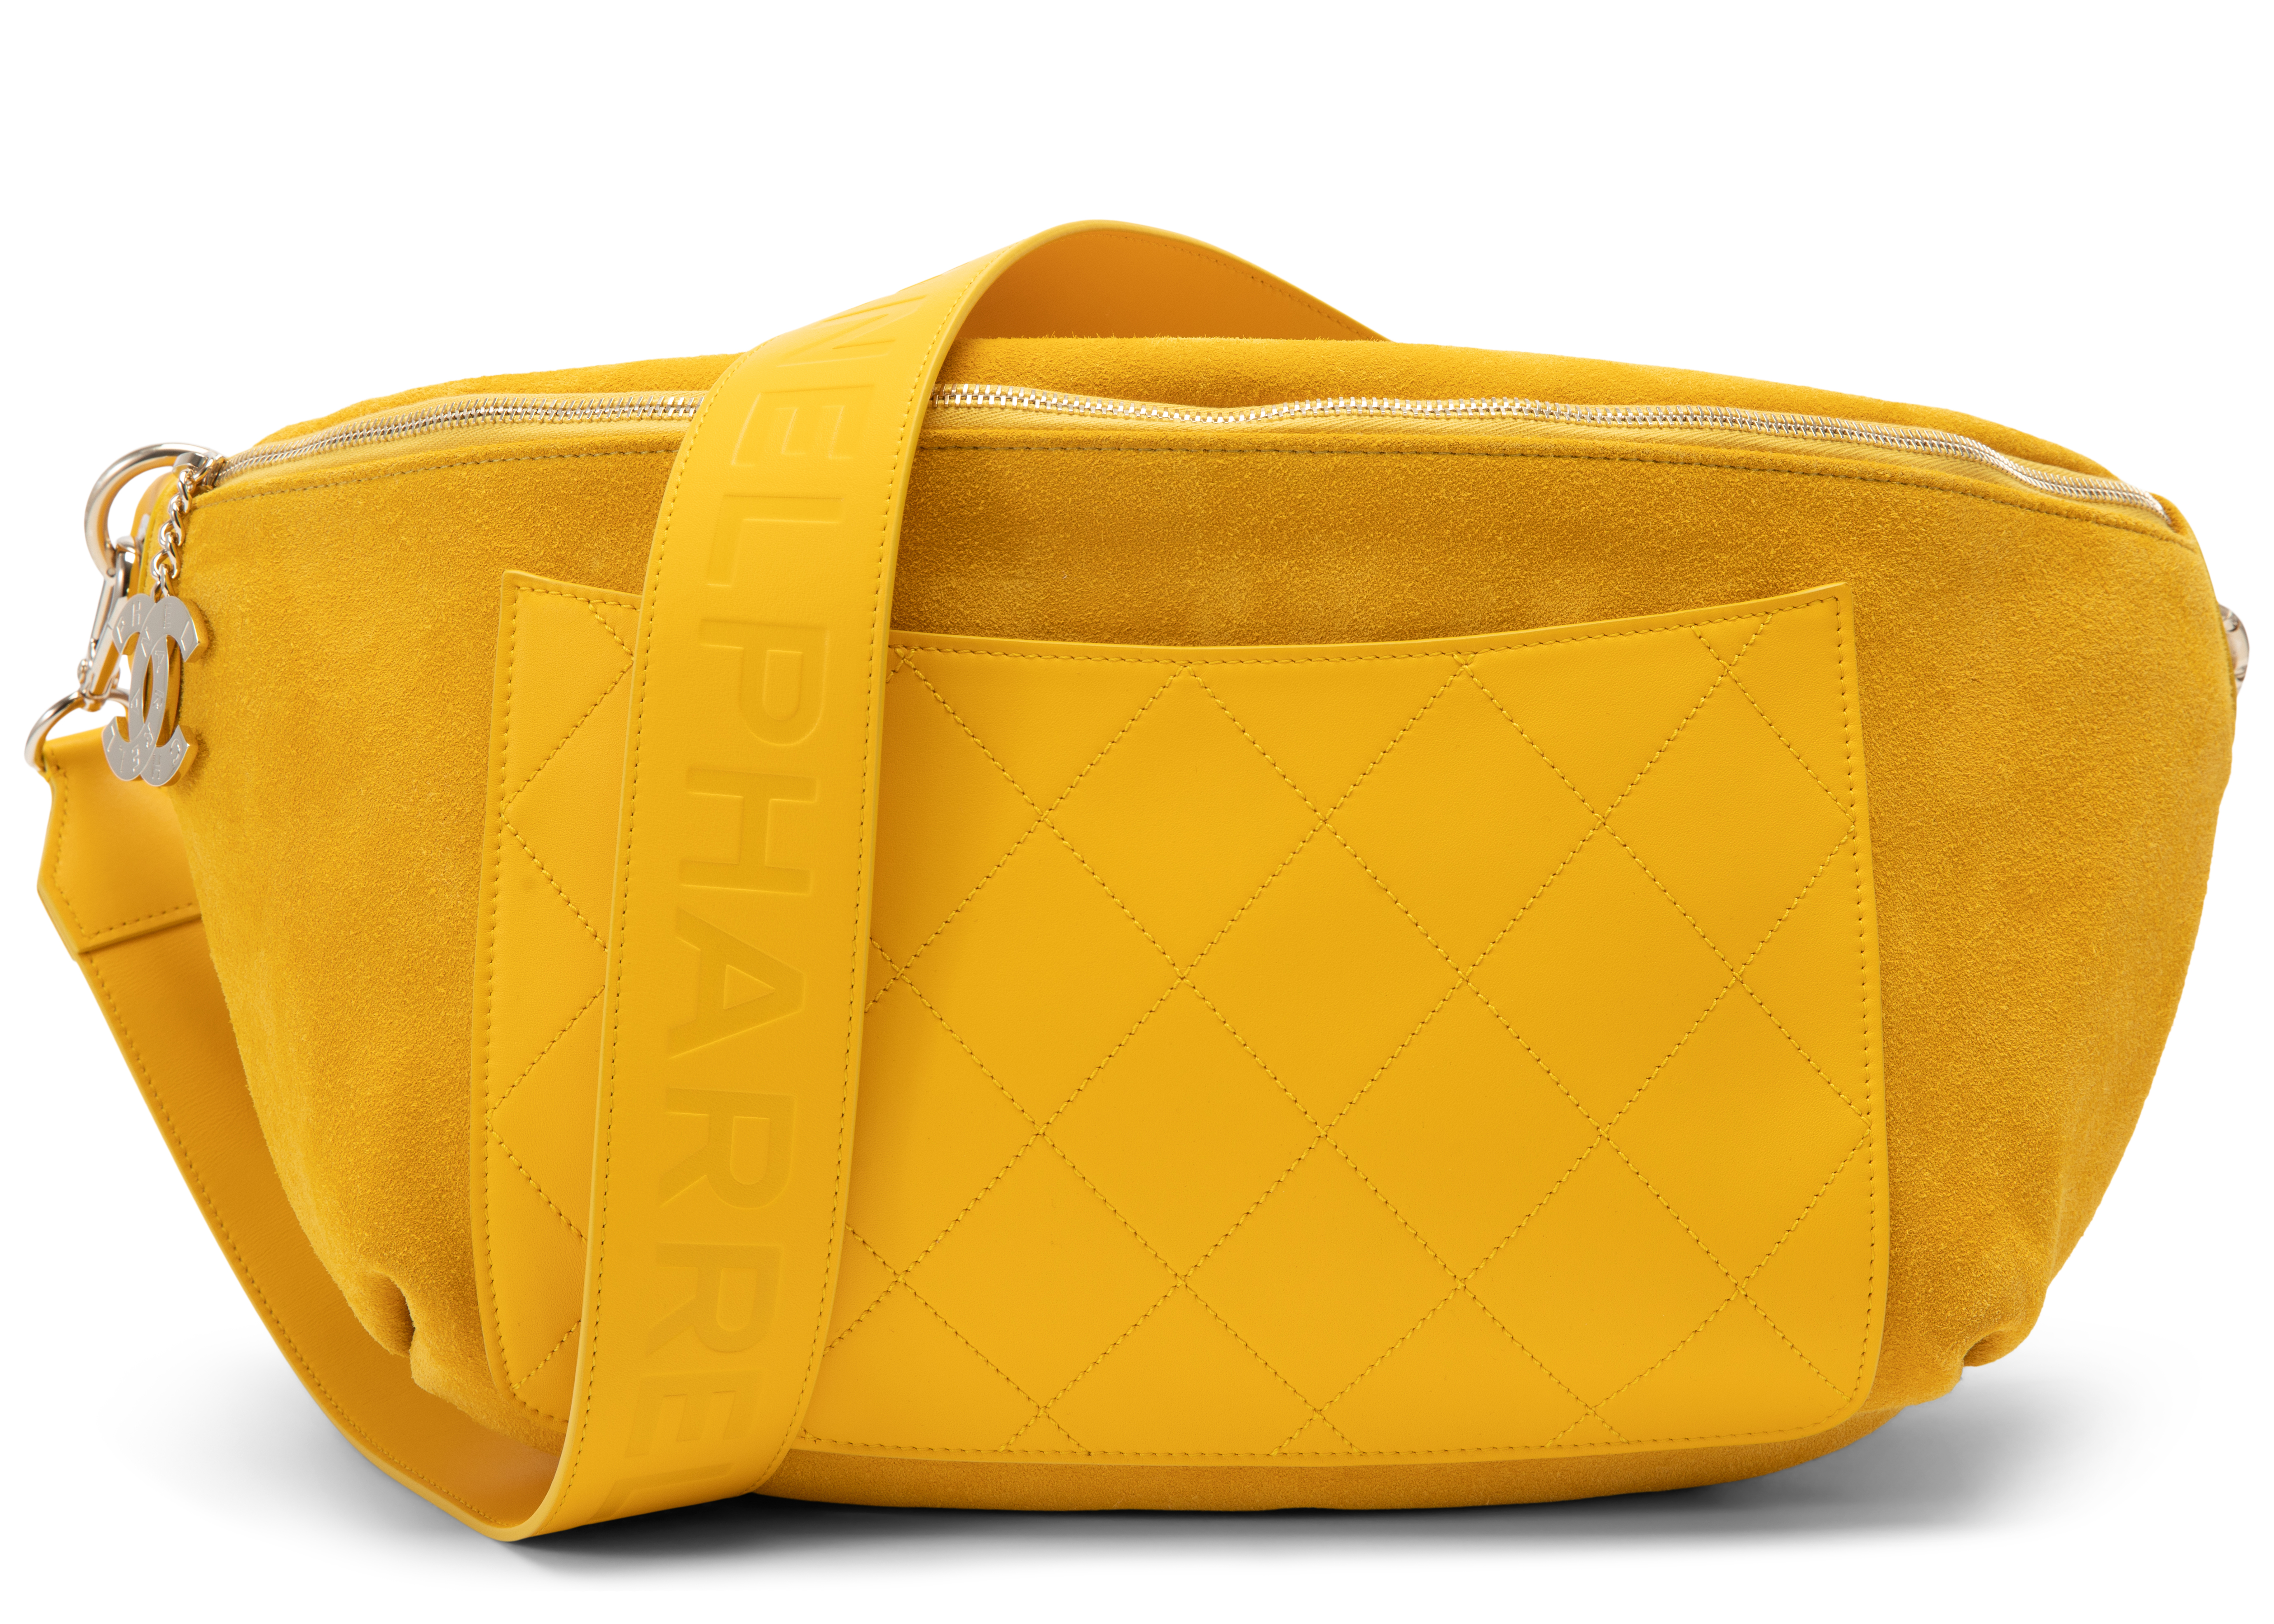 Chanel x Pharrell Waist Bag Yellow in 